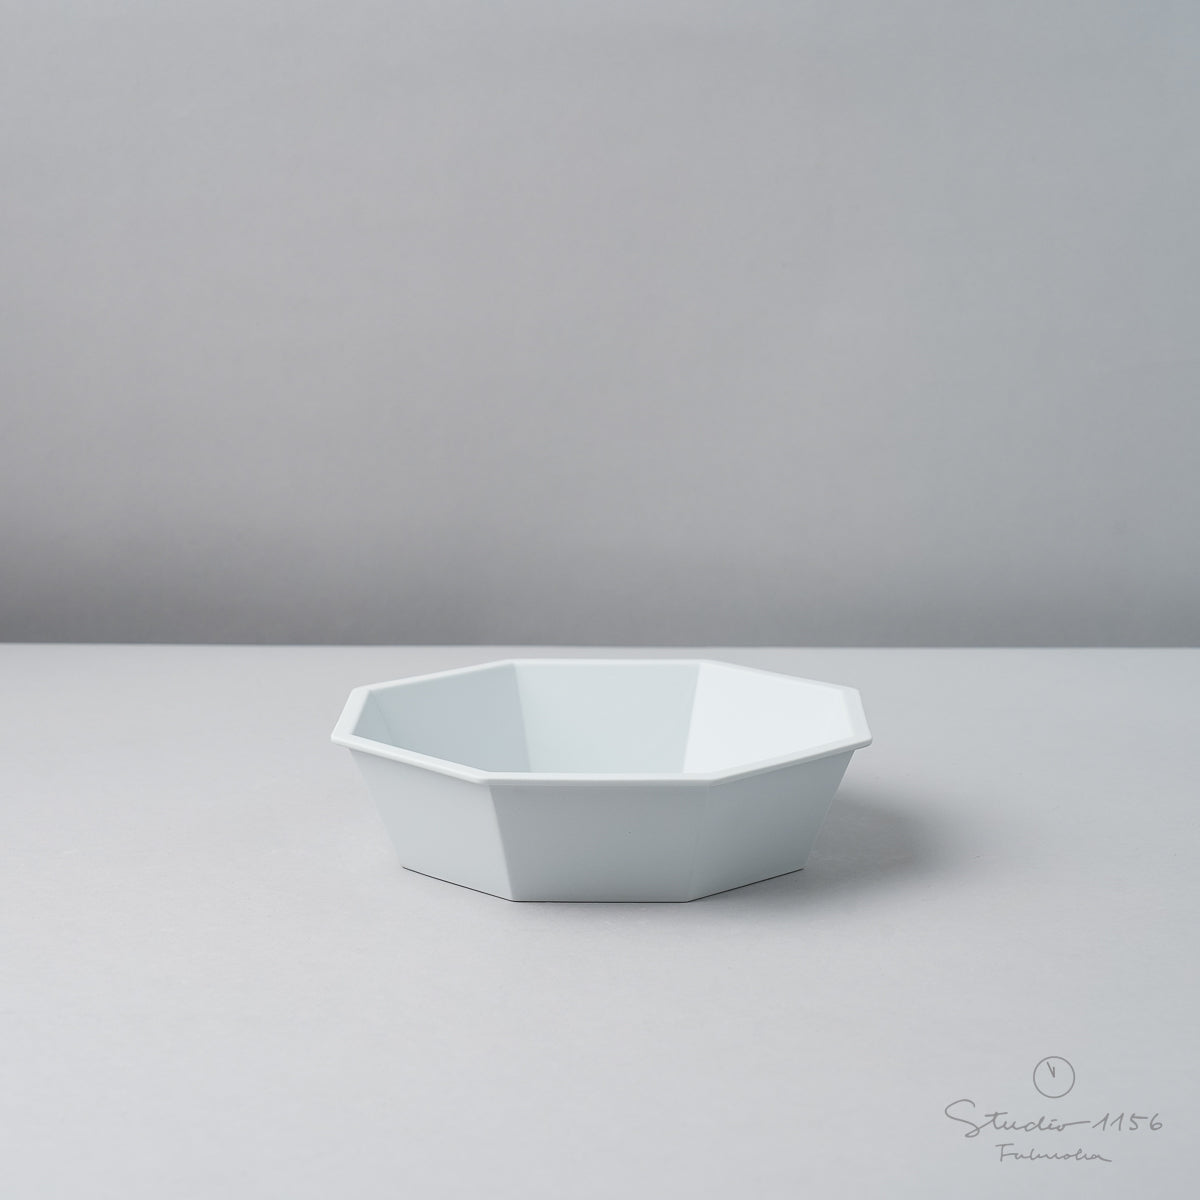 有田焼 TY "Standard" Anise Bowl Grey 150/220 150 1616 / Arita Japan Studio1156